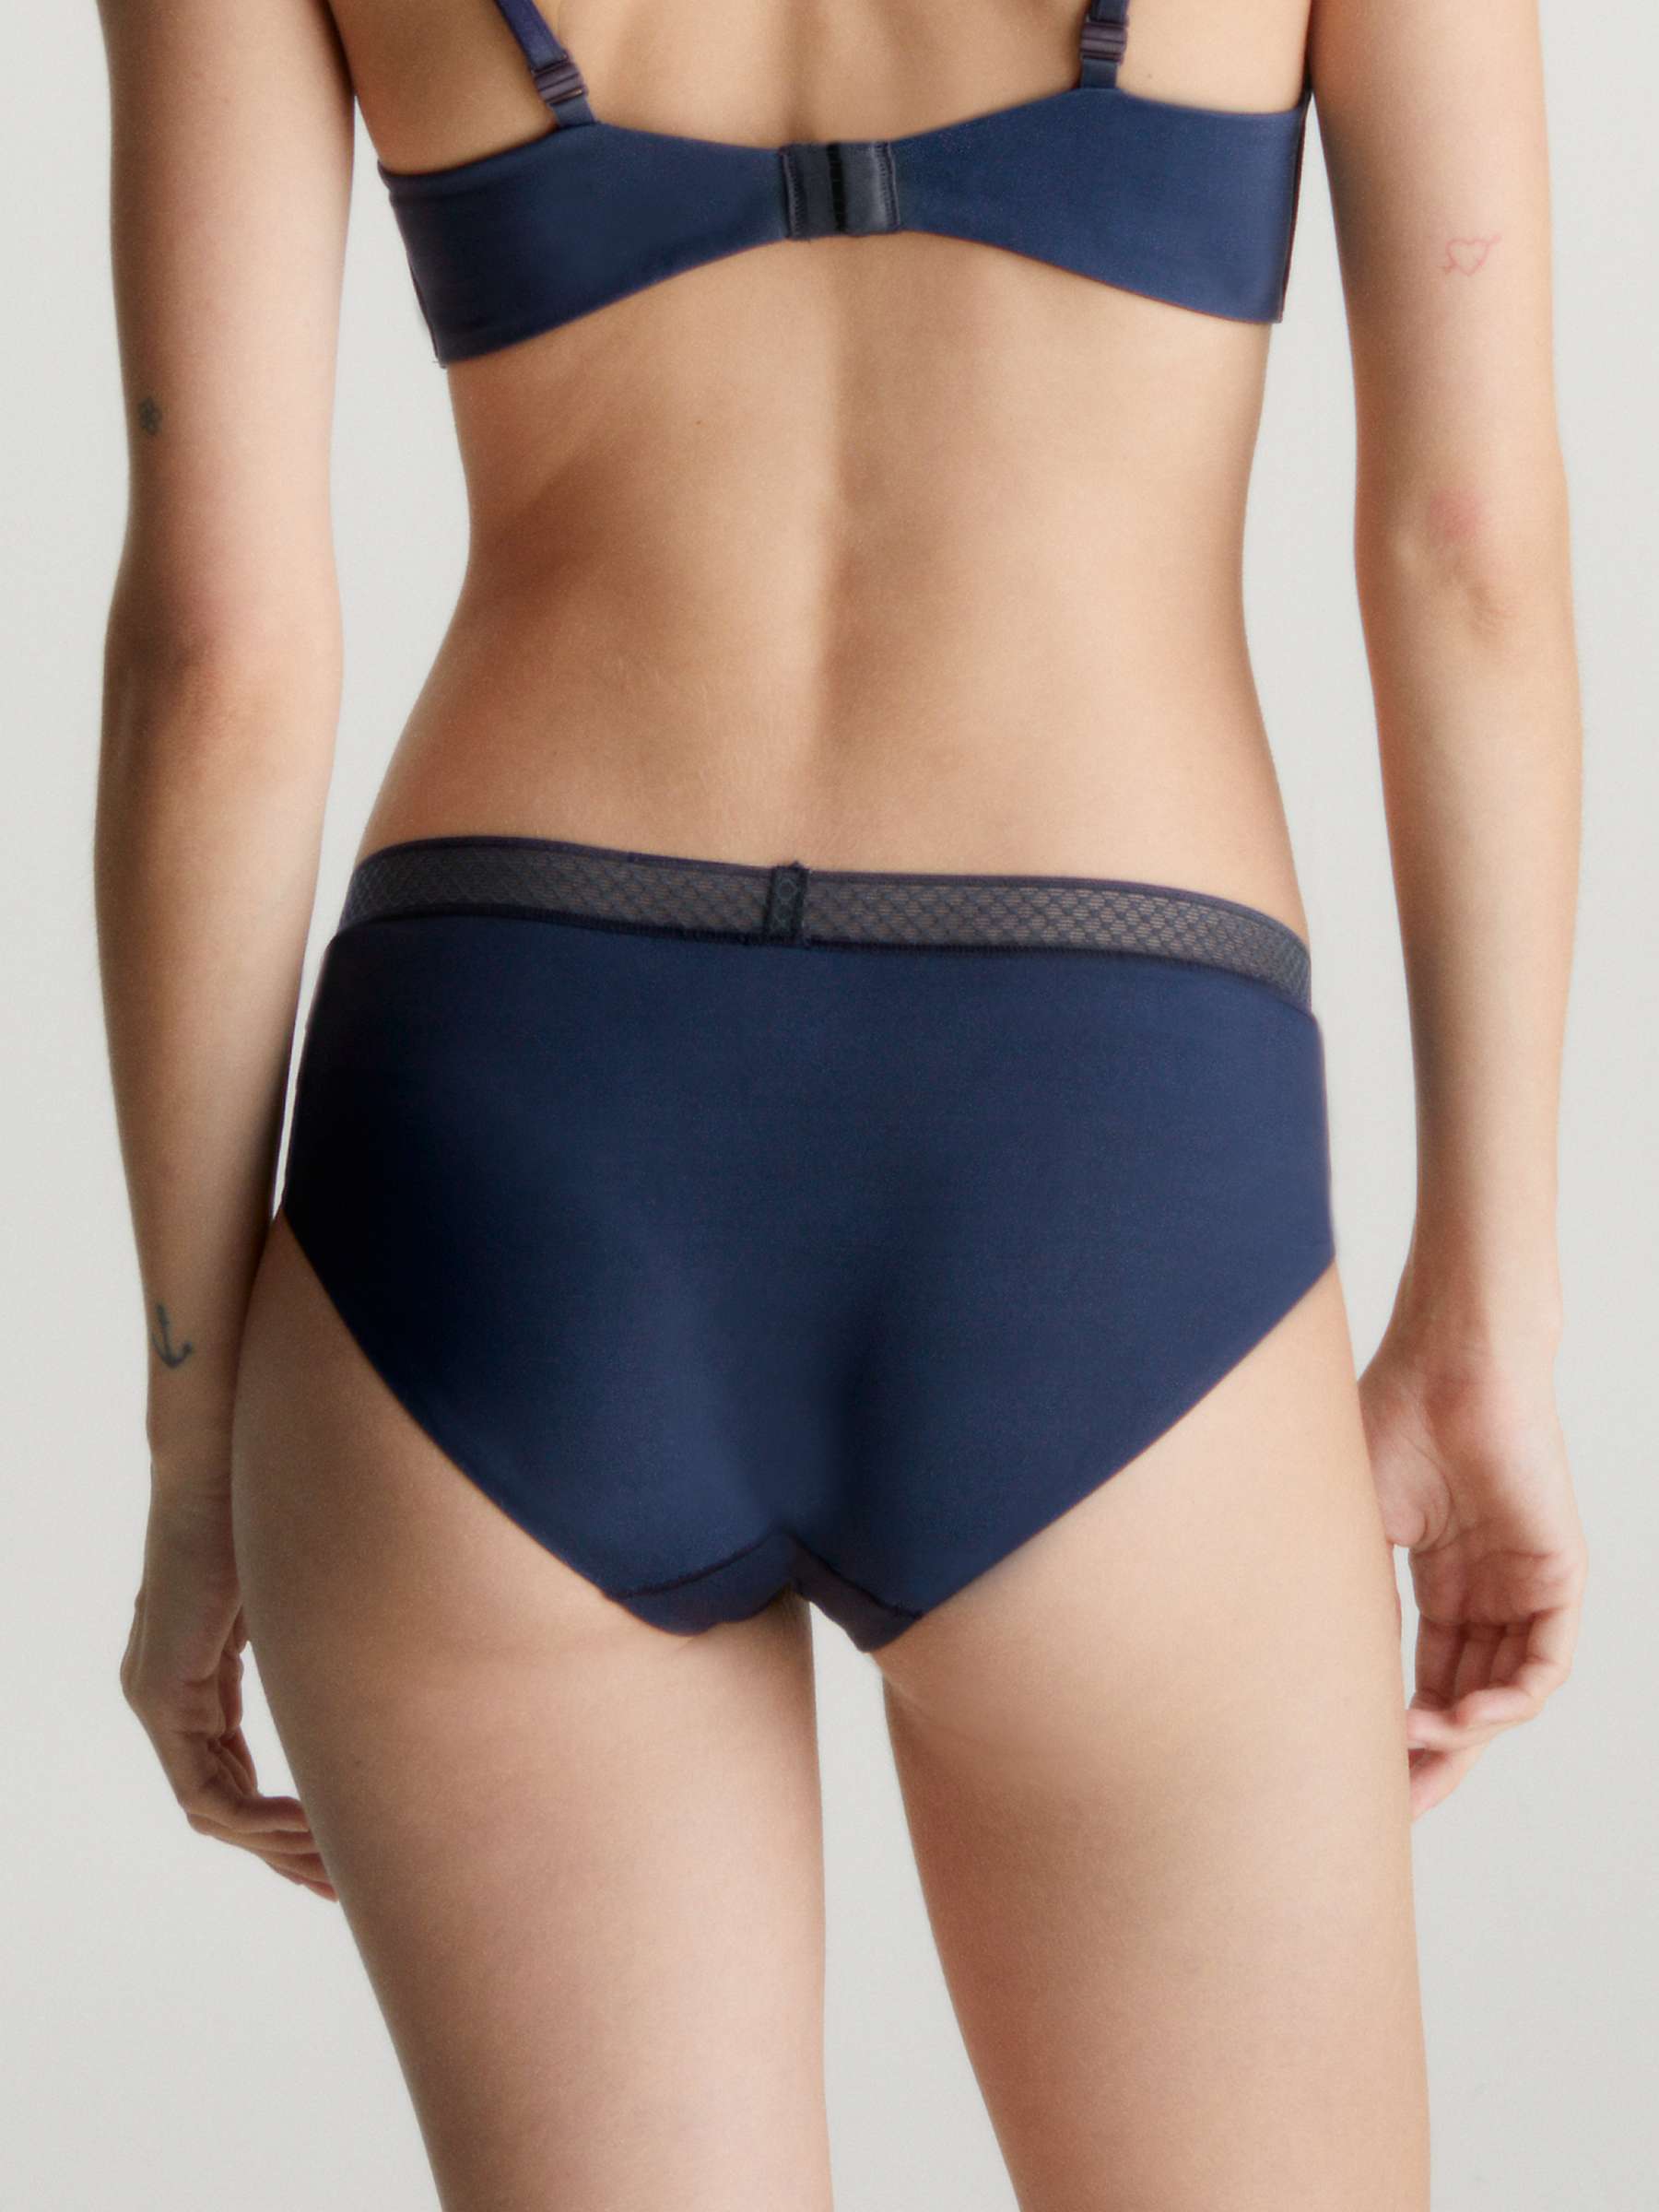 Buy Calvin Klein Seductive Comfort Bikini Knickers Online at johnlewis.com